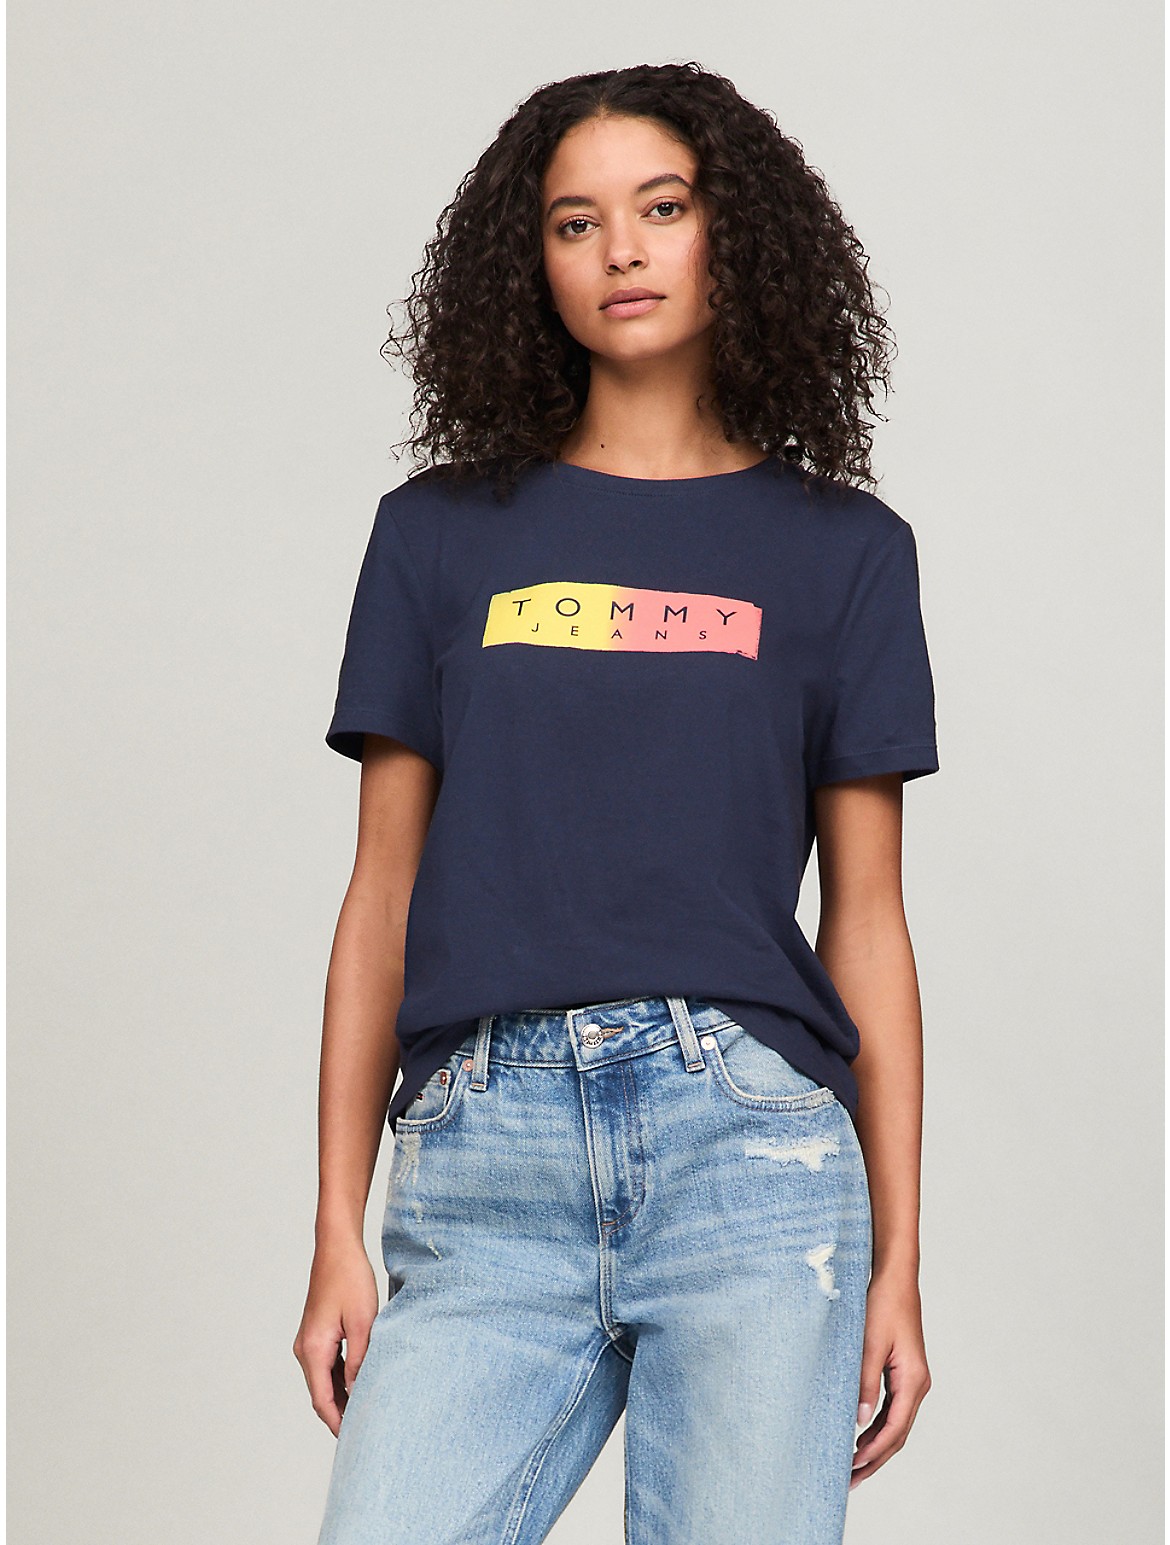 Tommy Hilfiger Women's Tommy Jeans Logo T-Shirt